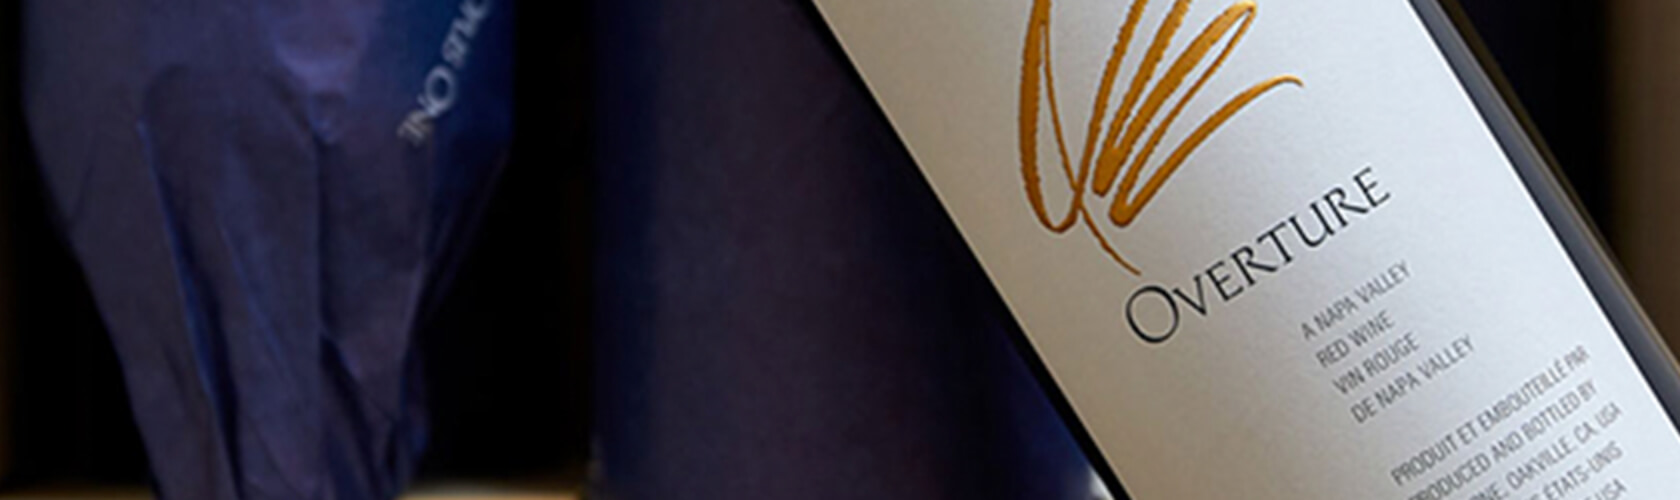 Opus One Overture, o excepcional ‘deuxième vin’ do Opus One!